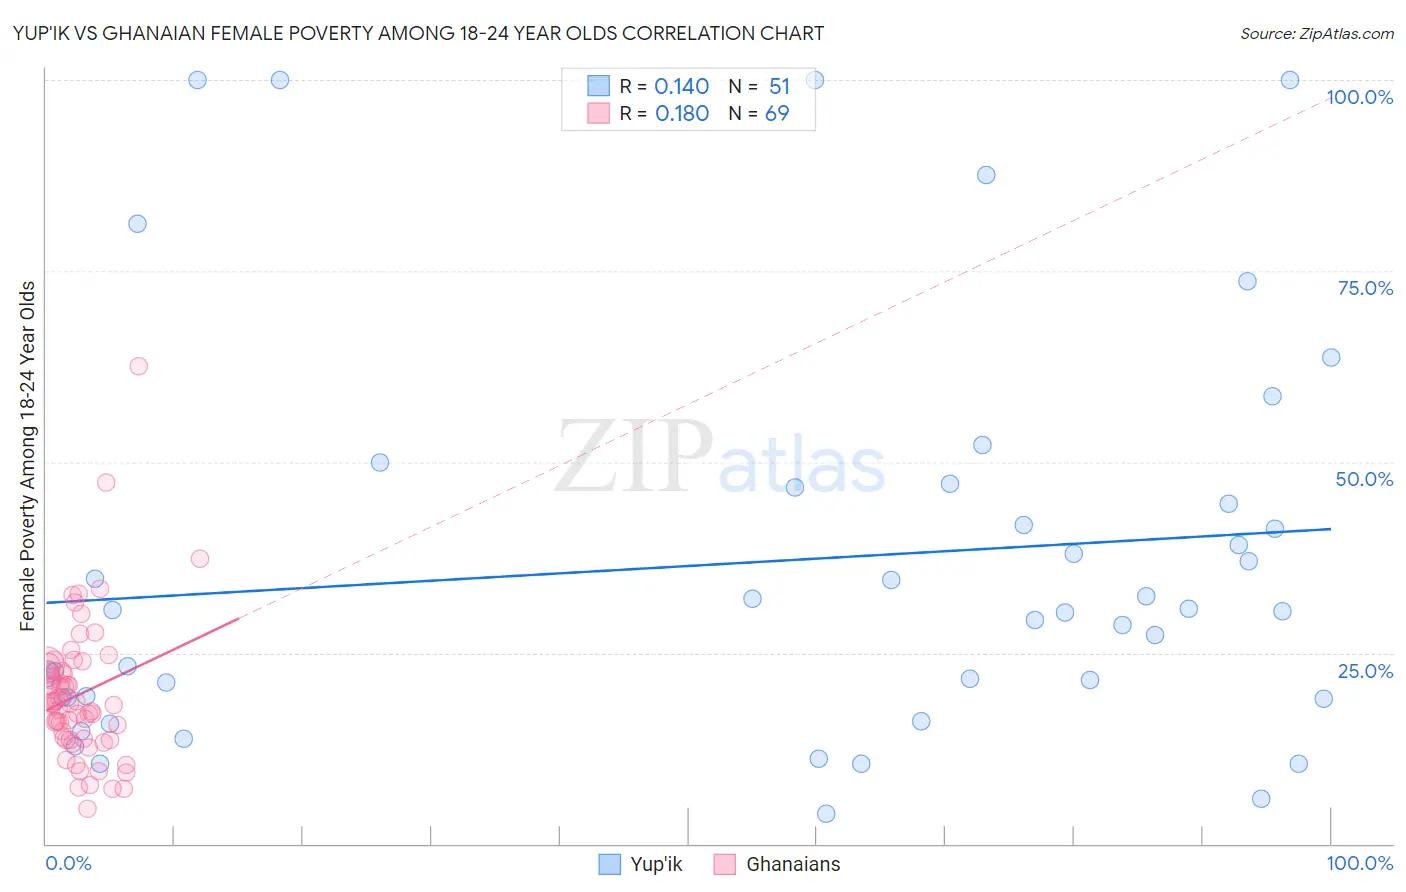 Yup'ik vs Ghanaian Female Poverty Among 18-24 Year Olds